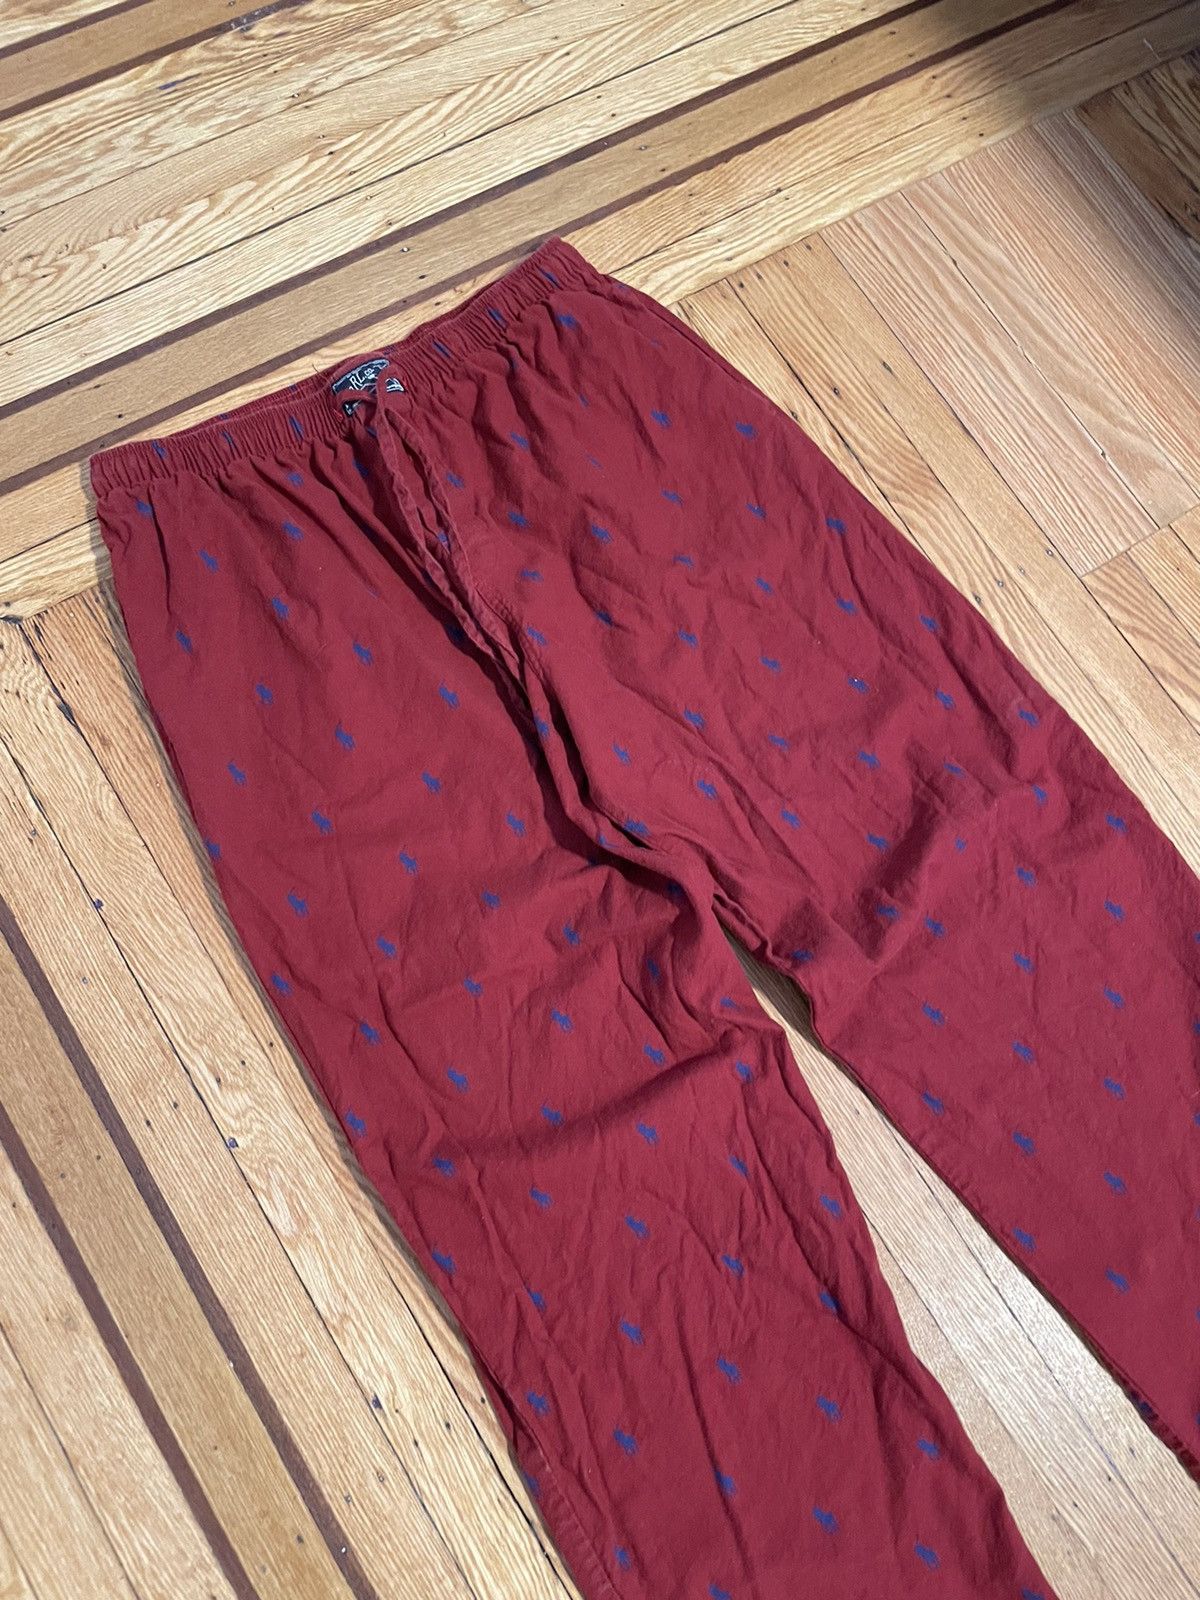 Ralph Lauren Vintage Polo Ralph Lauren Sleepwear Monogram Pants Trousers Size US 31 - 4 Thumbnail